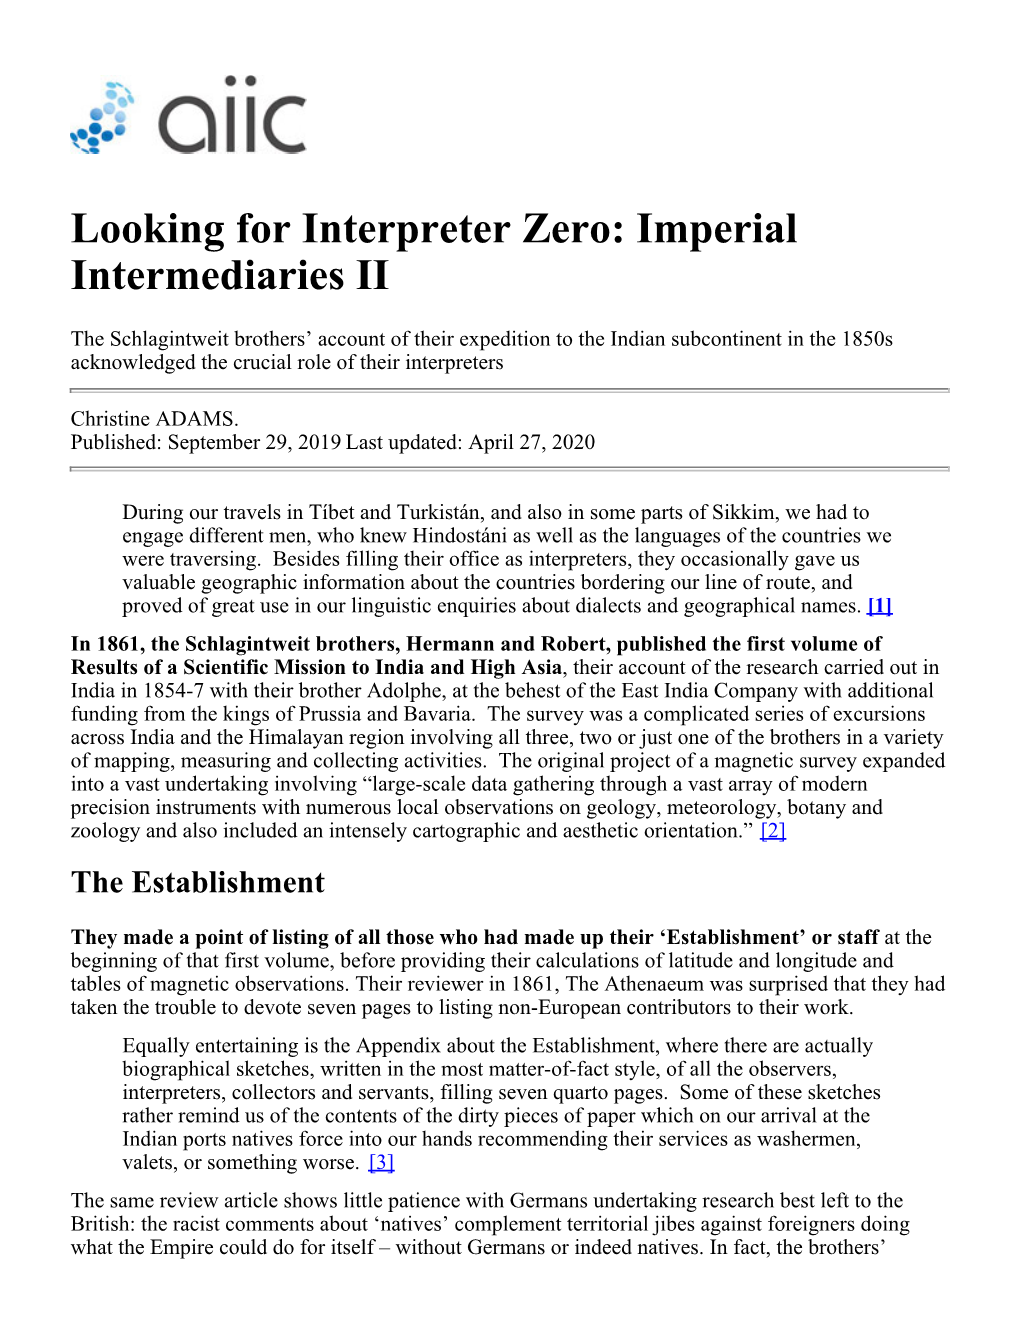 Looking for Interpreter Zero: Imperial Intermediaries II